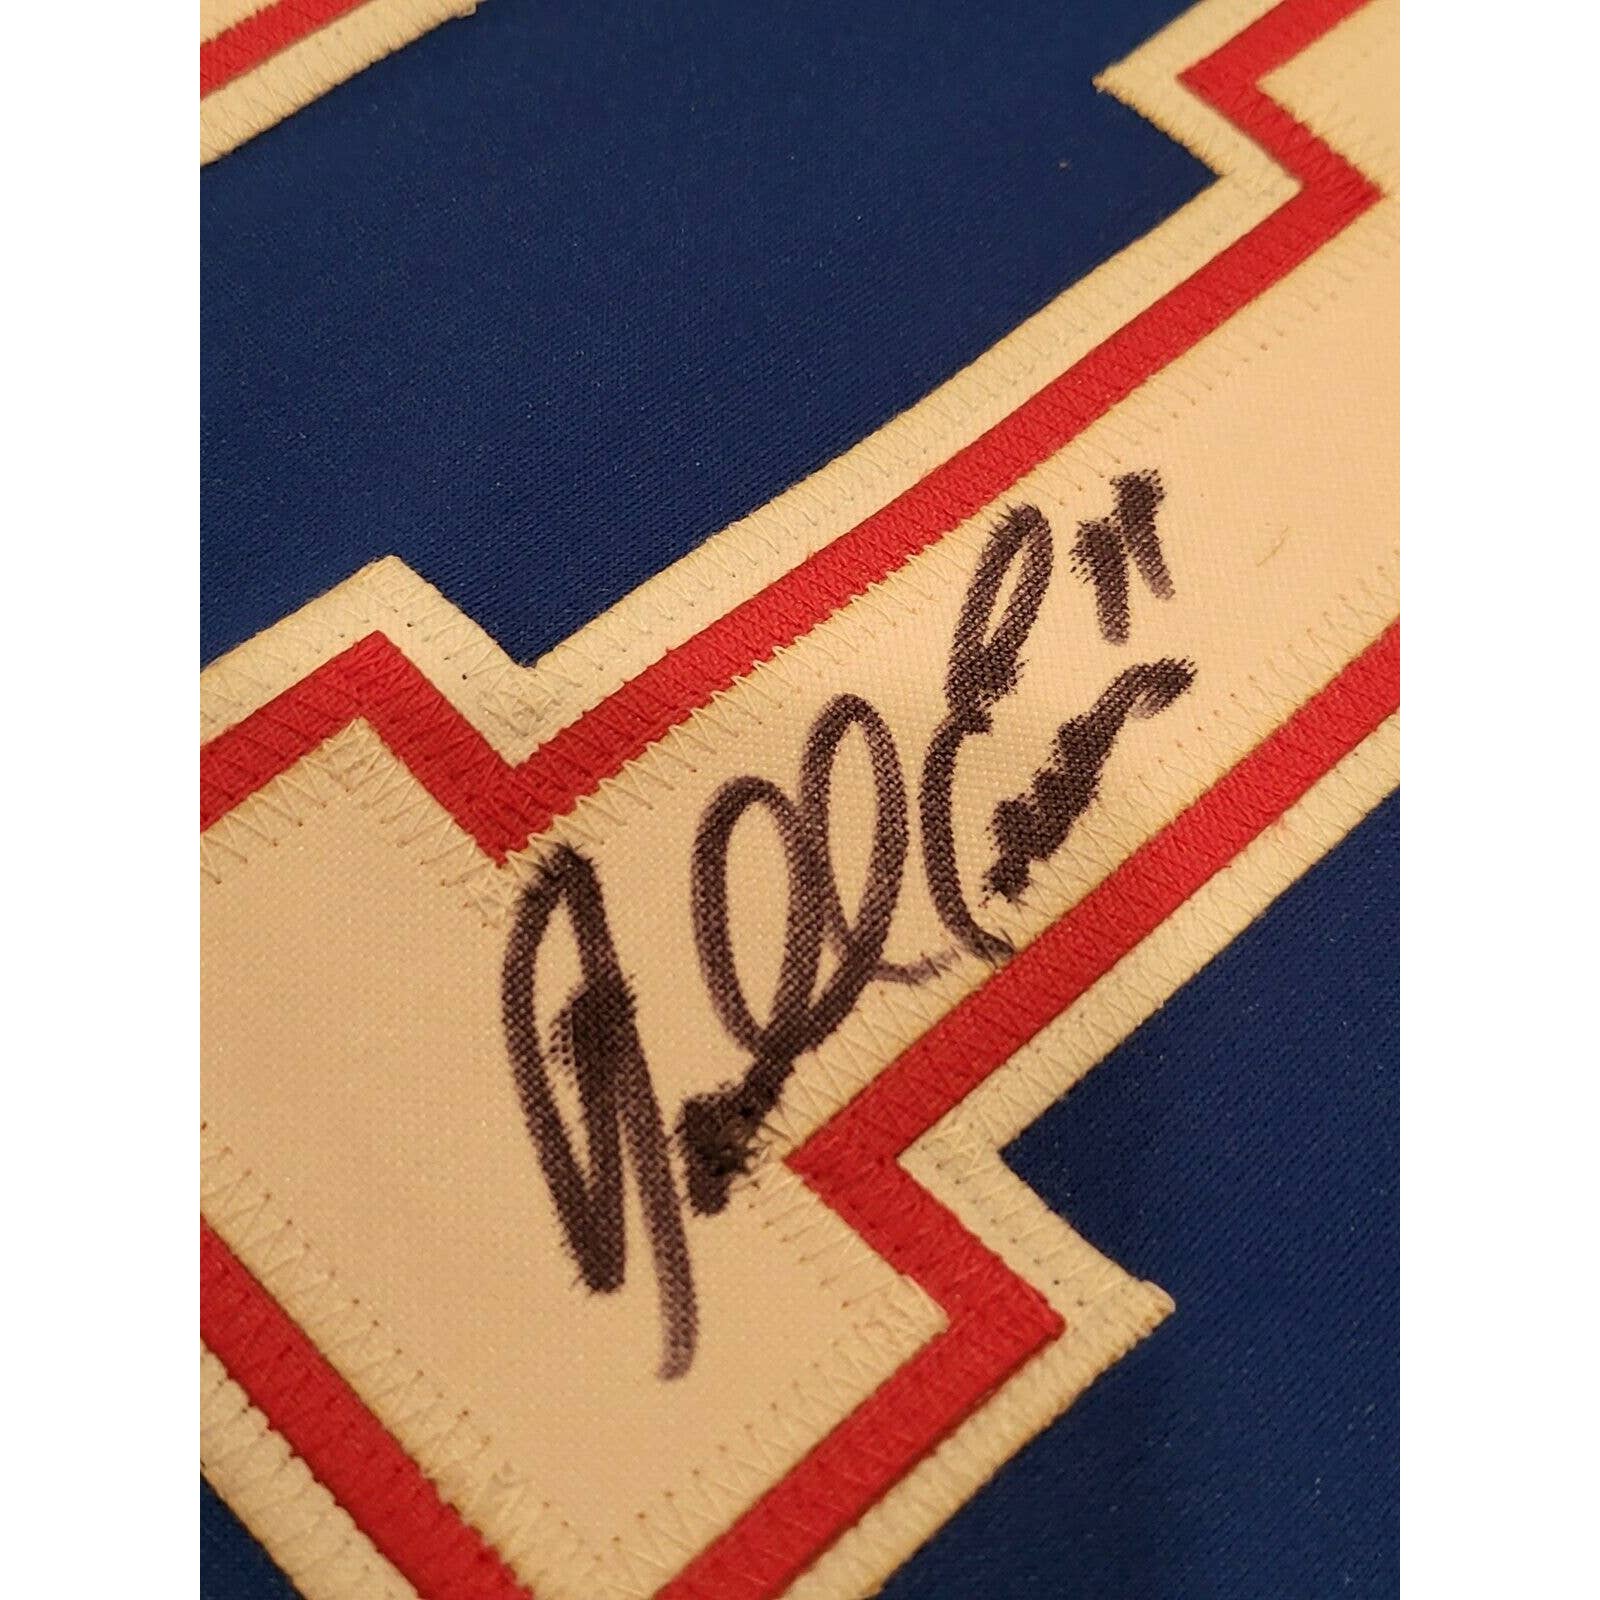 Darrell Evans Autographed/Signed Jersey Beckett Holo Atlanta Braves - TreasuresEvolved